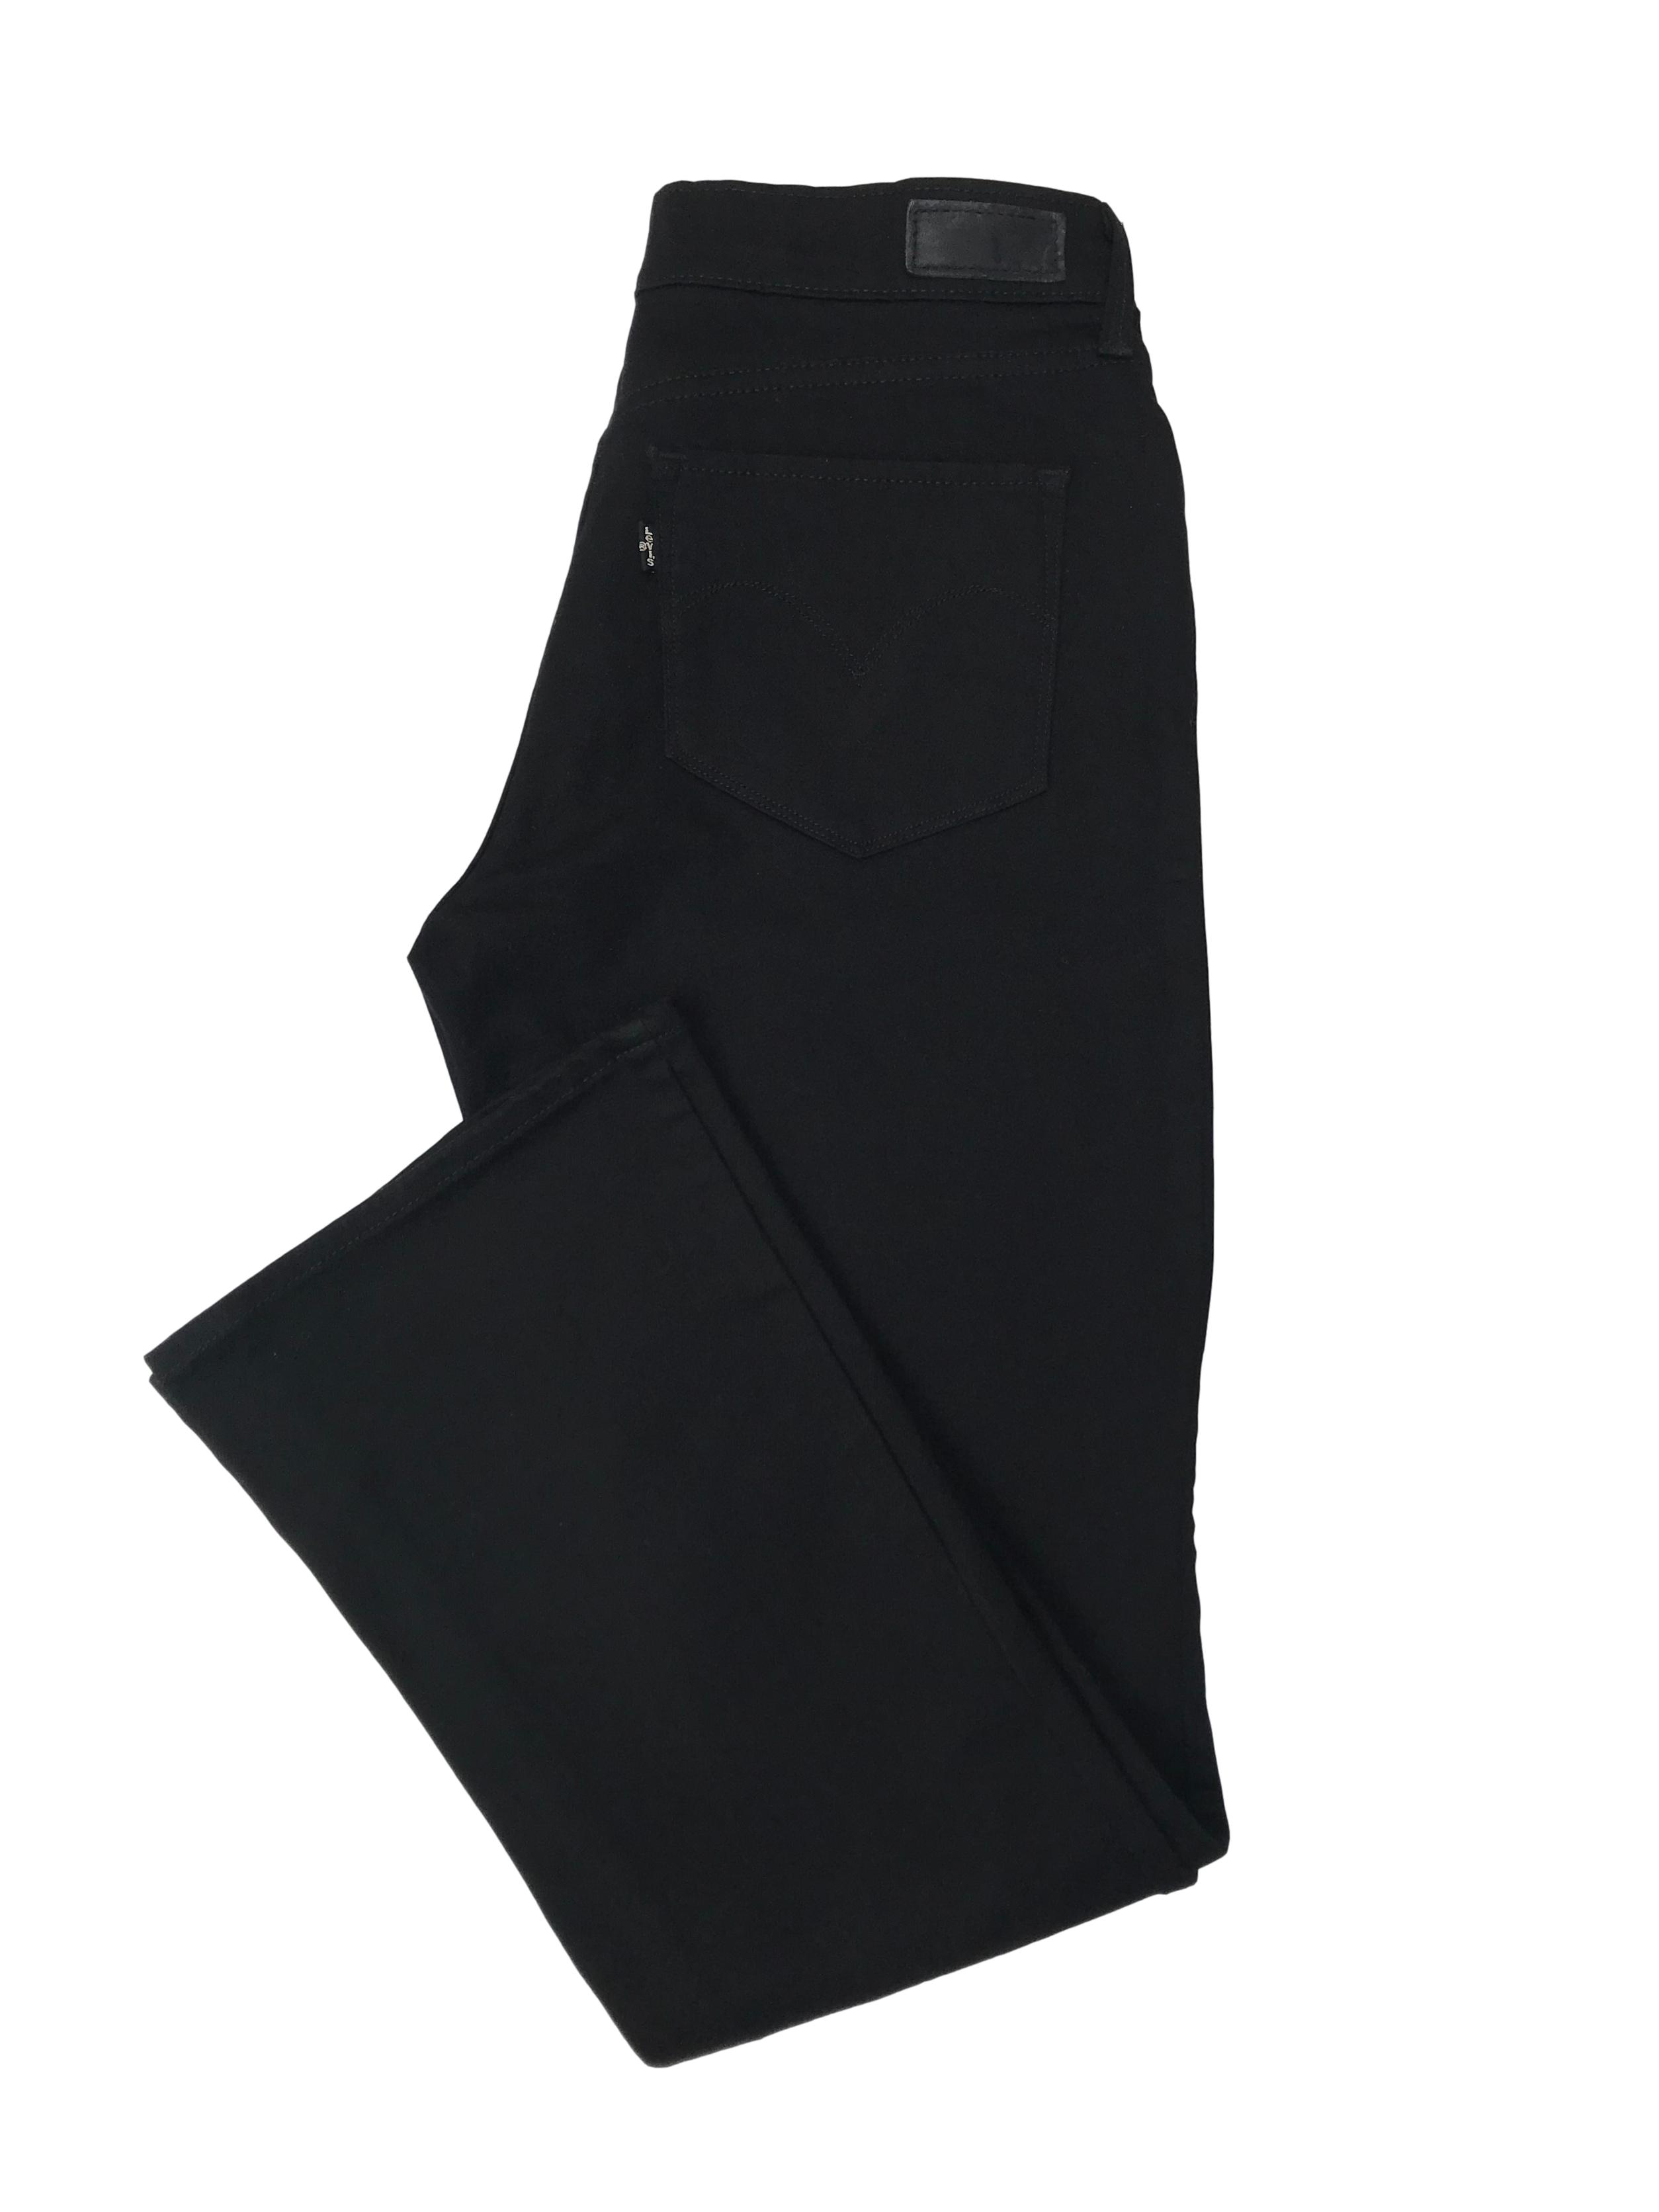 Pantalón jean Levi´s bold curve, mid rise, bootcut skinny. Tiro medio, ligeramente stretch y semicampana. Cintura 75cm Largo 95cm